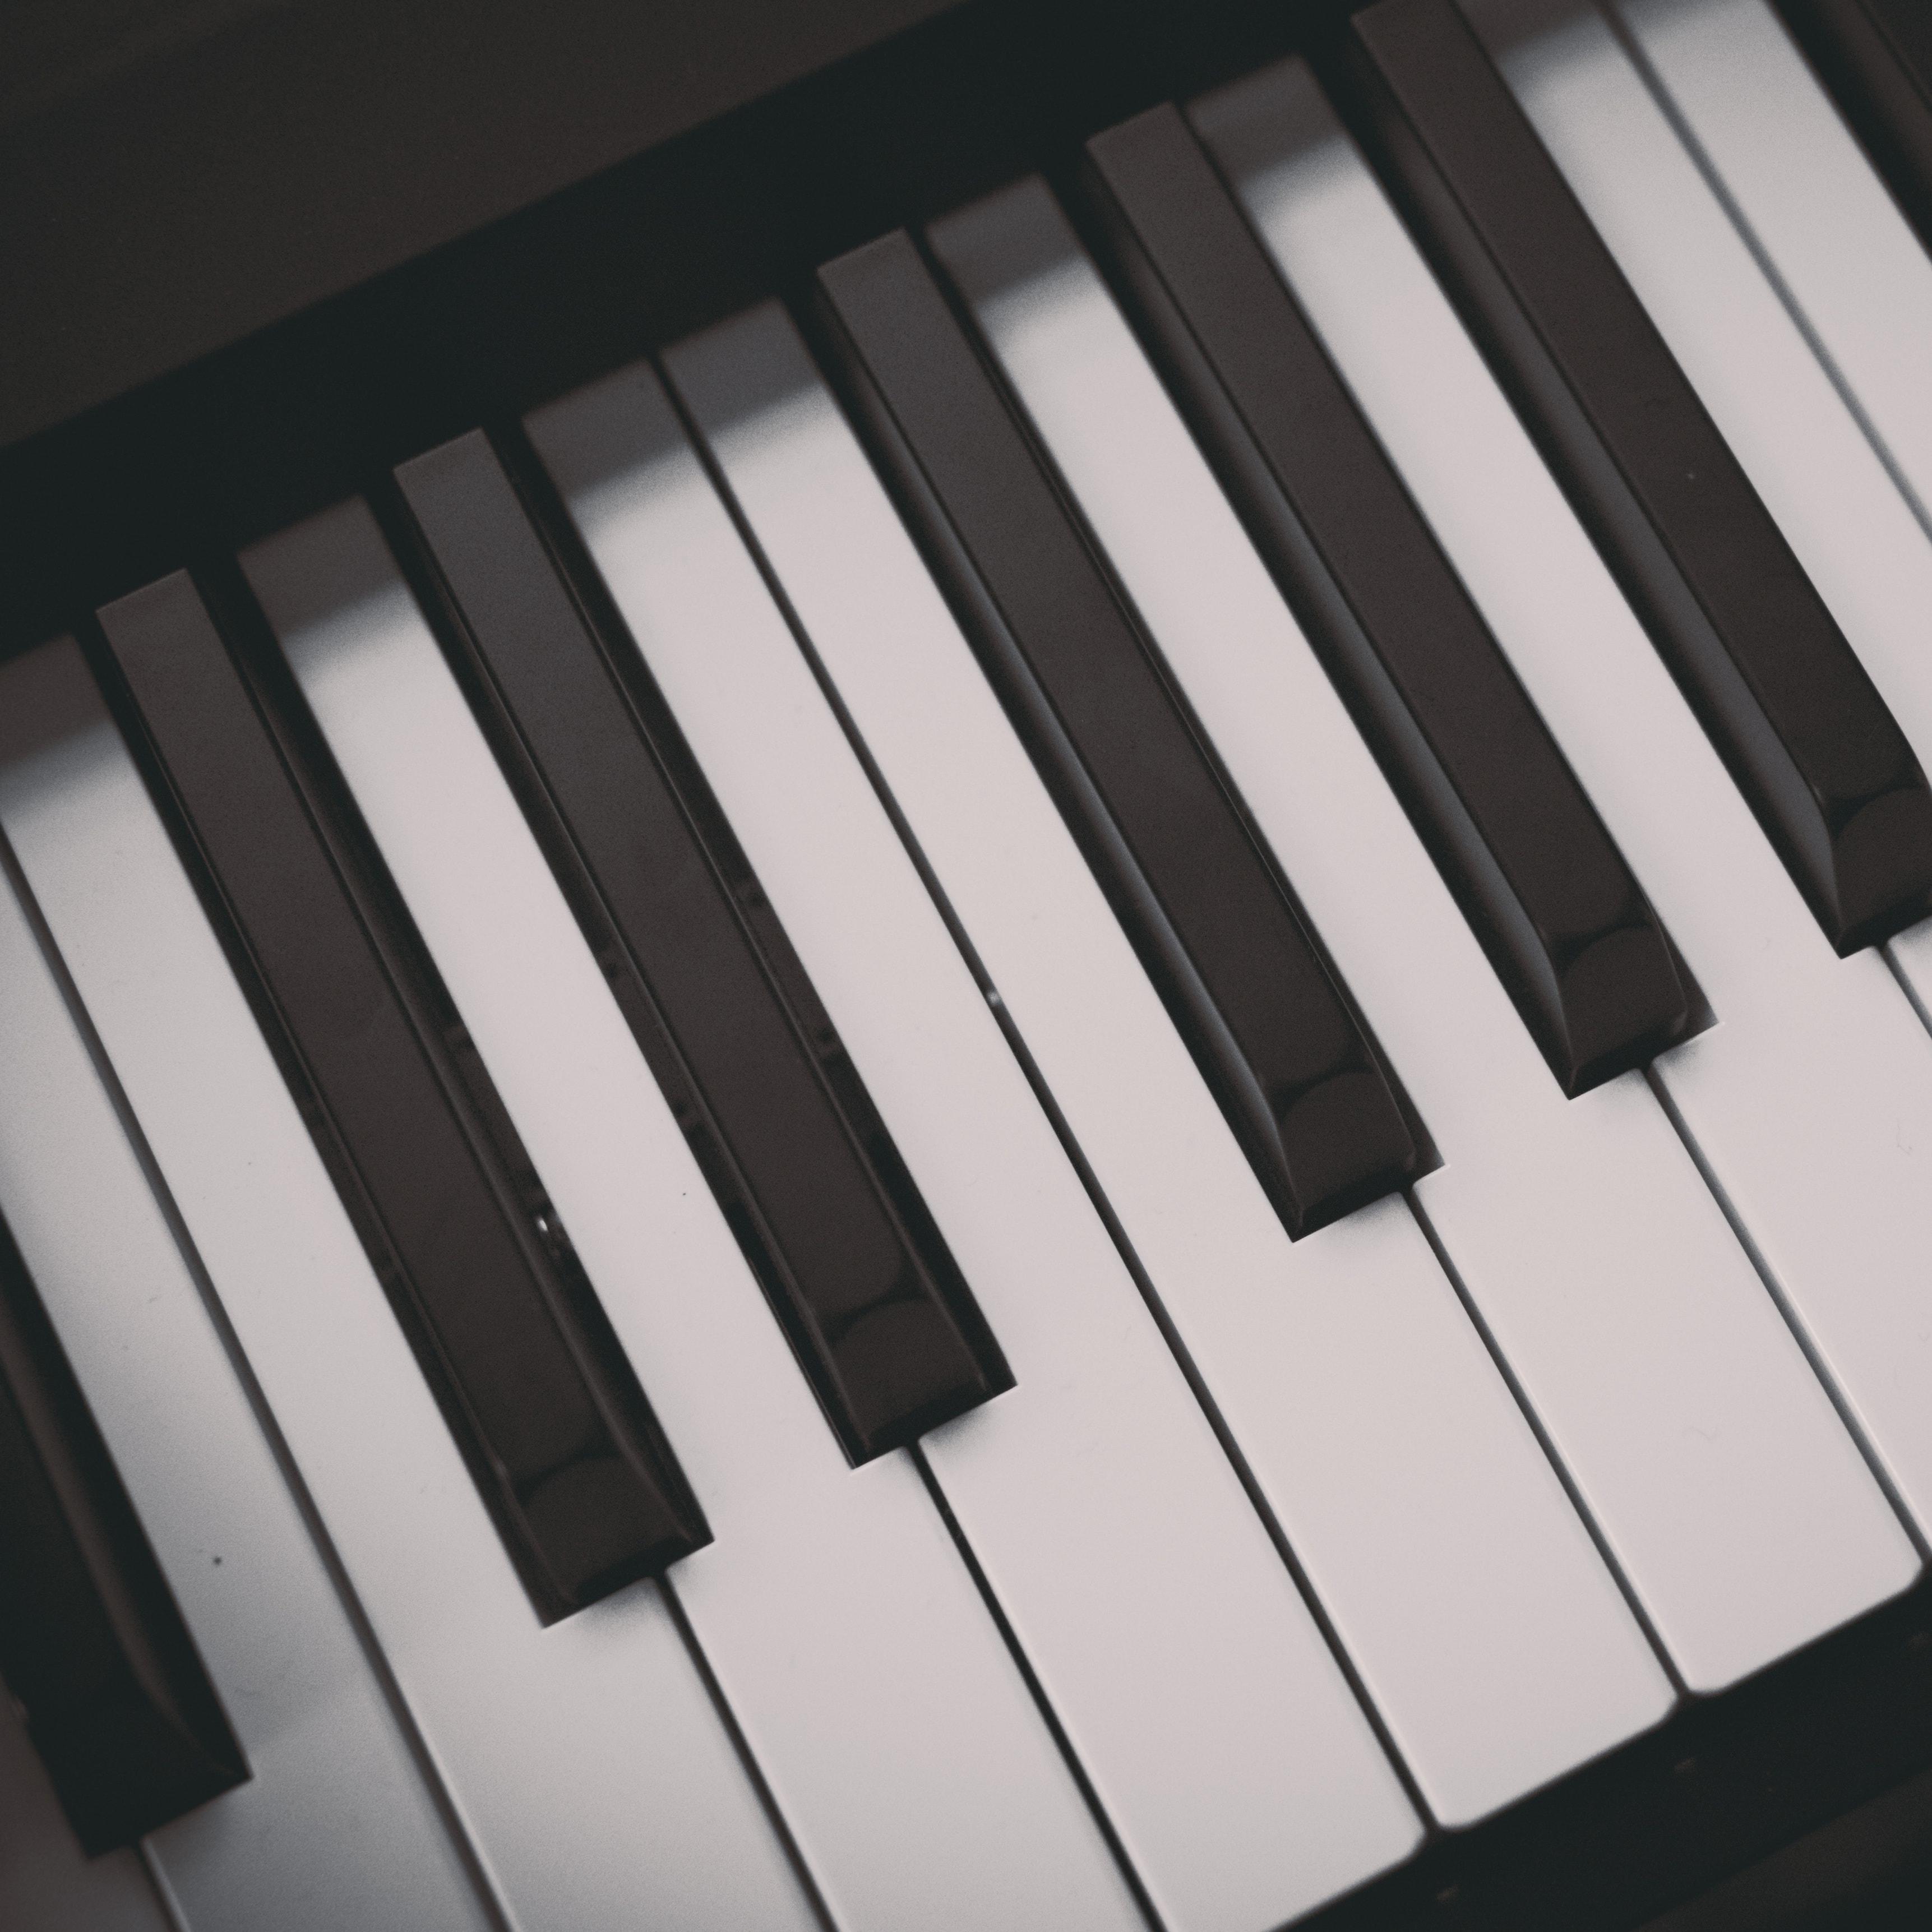 30 Beautiful Piano Love Songs